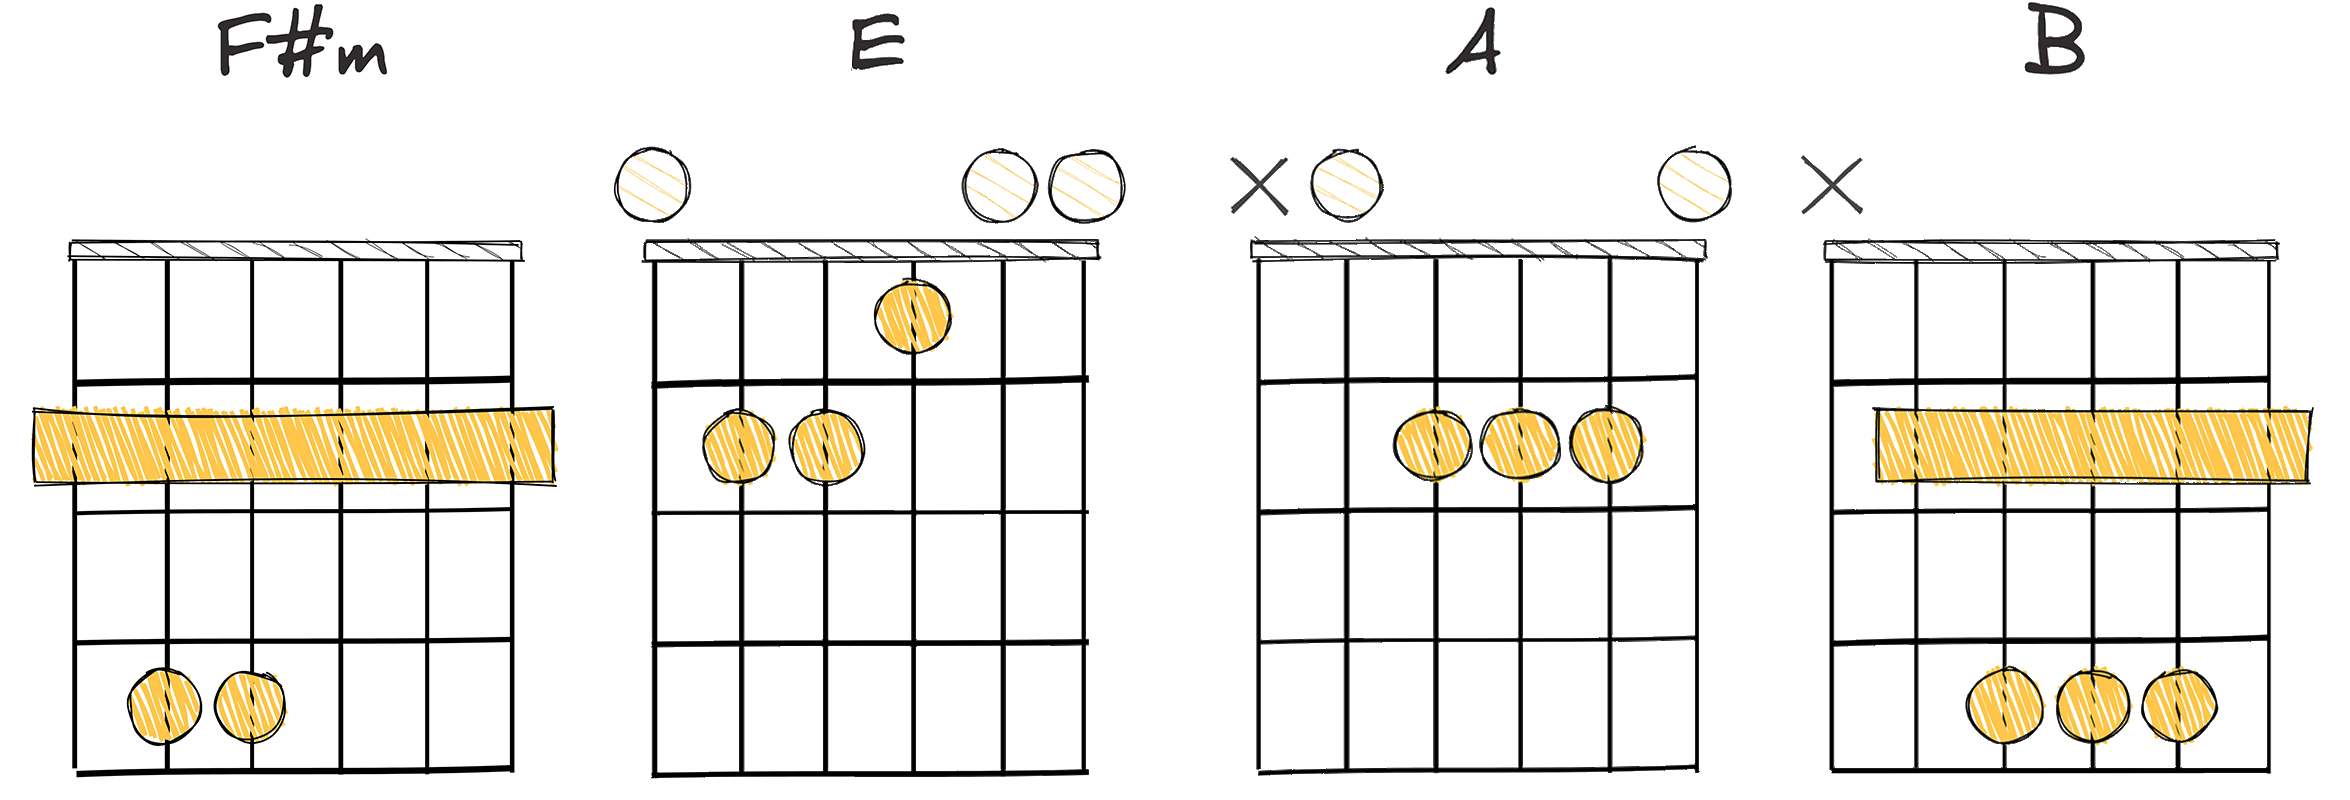 ii-I-IV-V (2-1-4-5) chords diagram